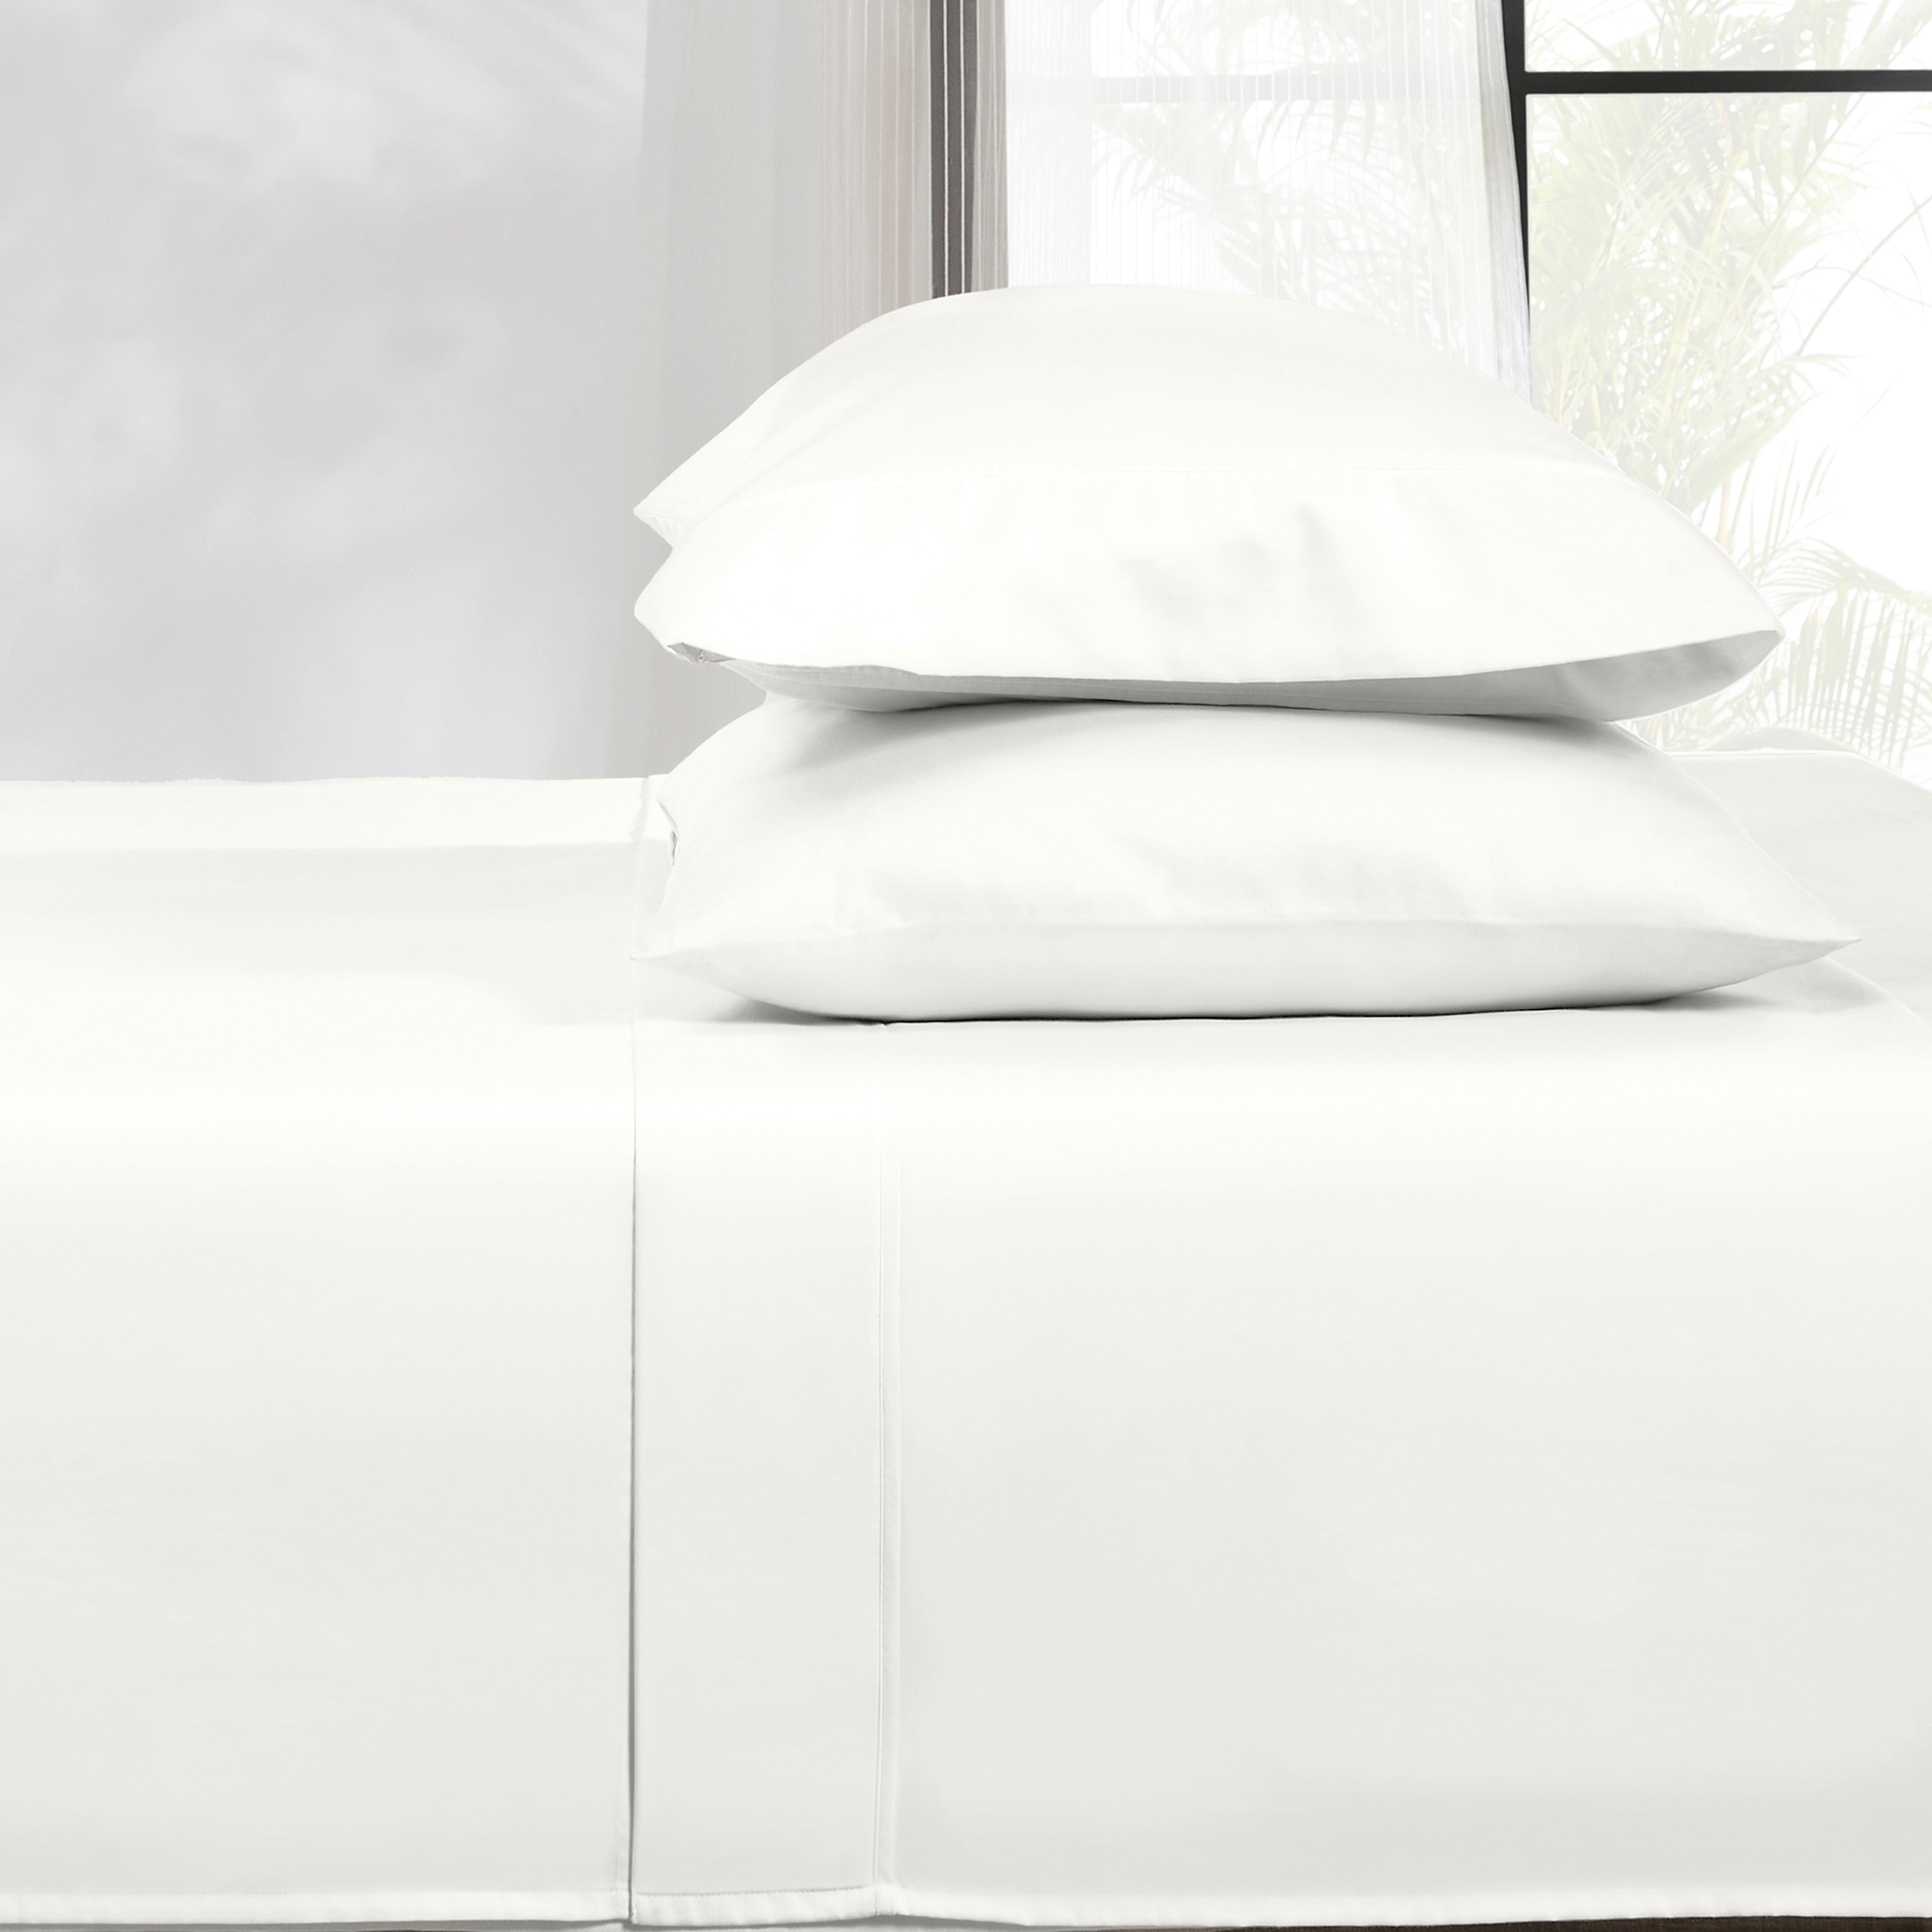 Source Custom logo 100% cotton fantasy bed sheets sets on m.